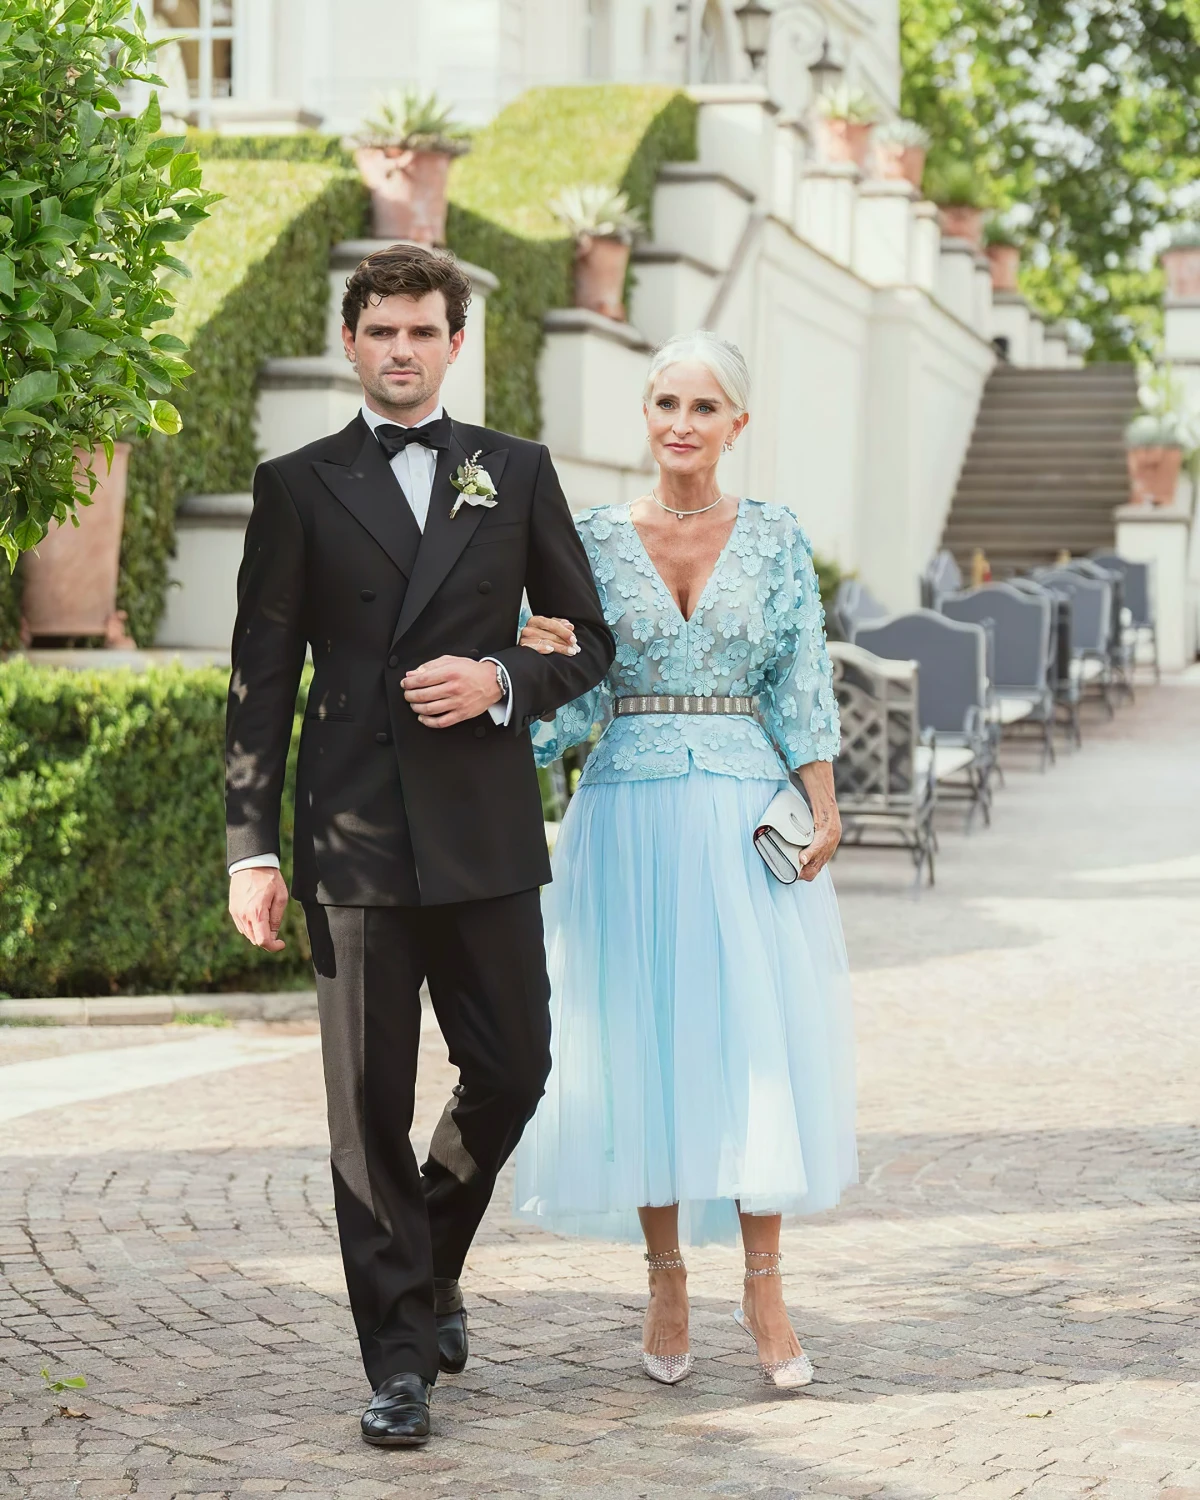 robe bleu pastel femme 60 ans mariage homme costume jardin